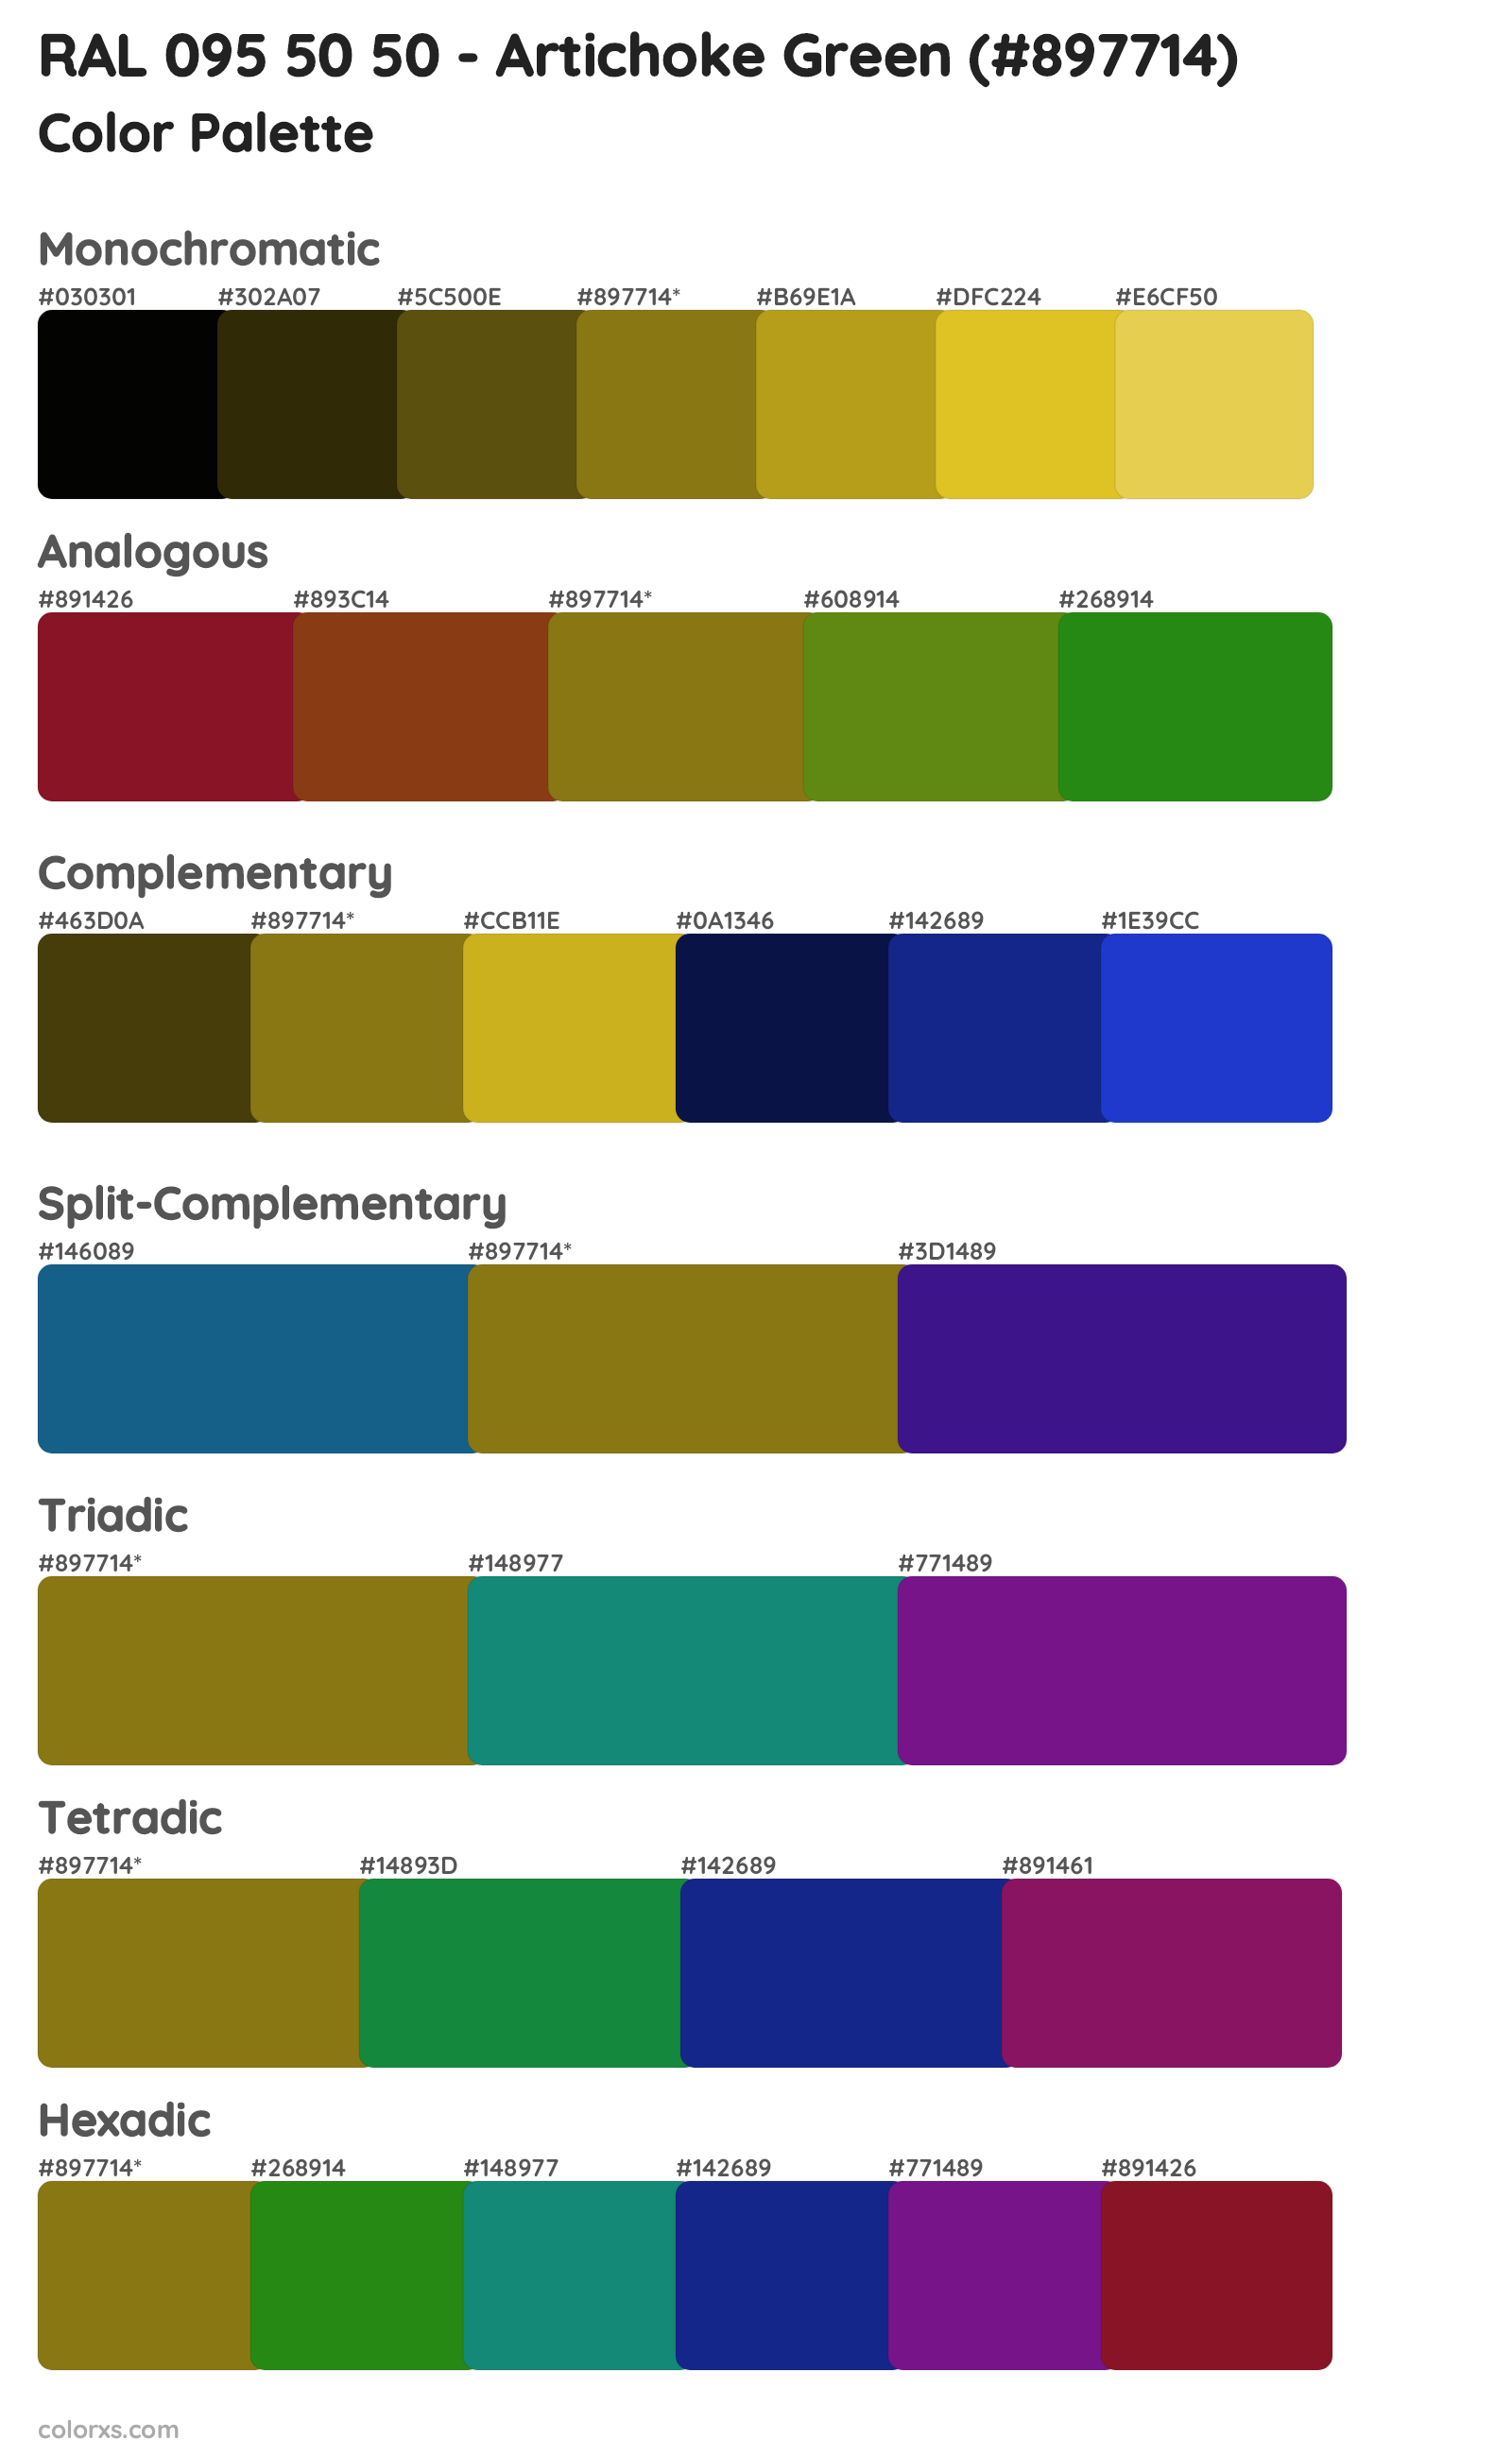 RAL 095 50 50 - Artichoke Green Color Scheme Palettes